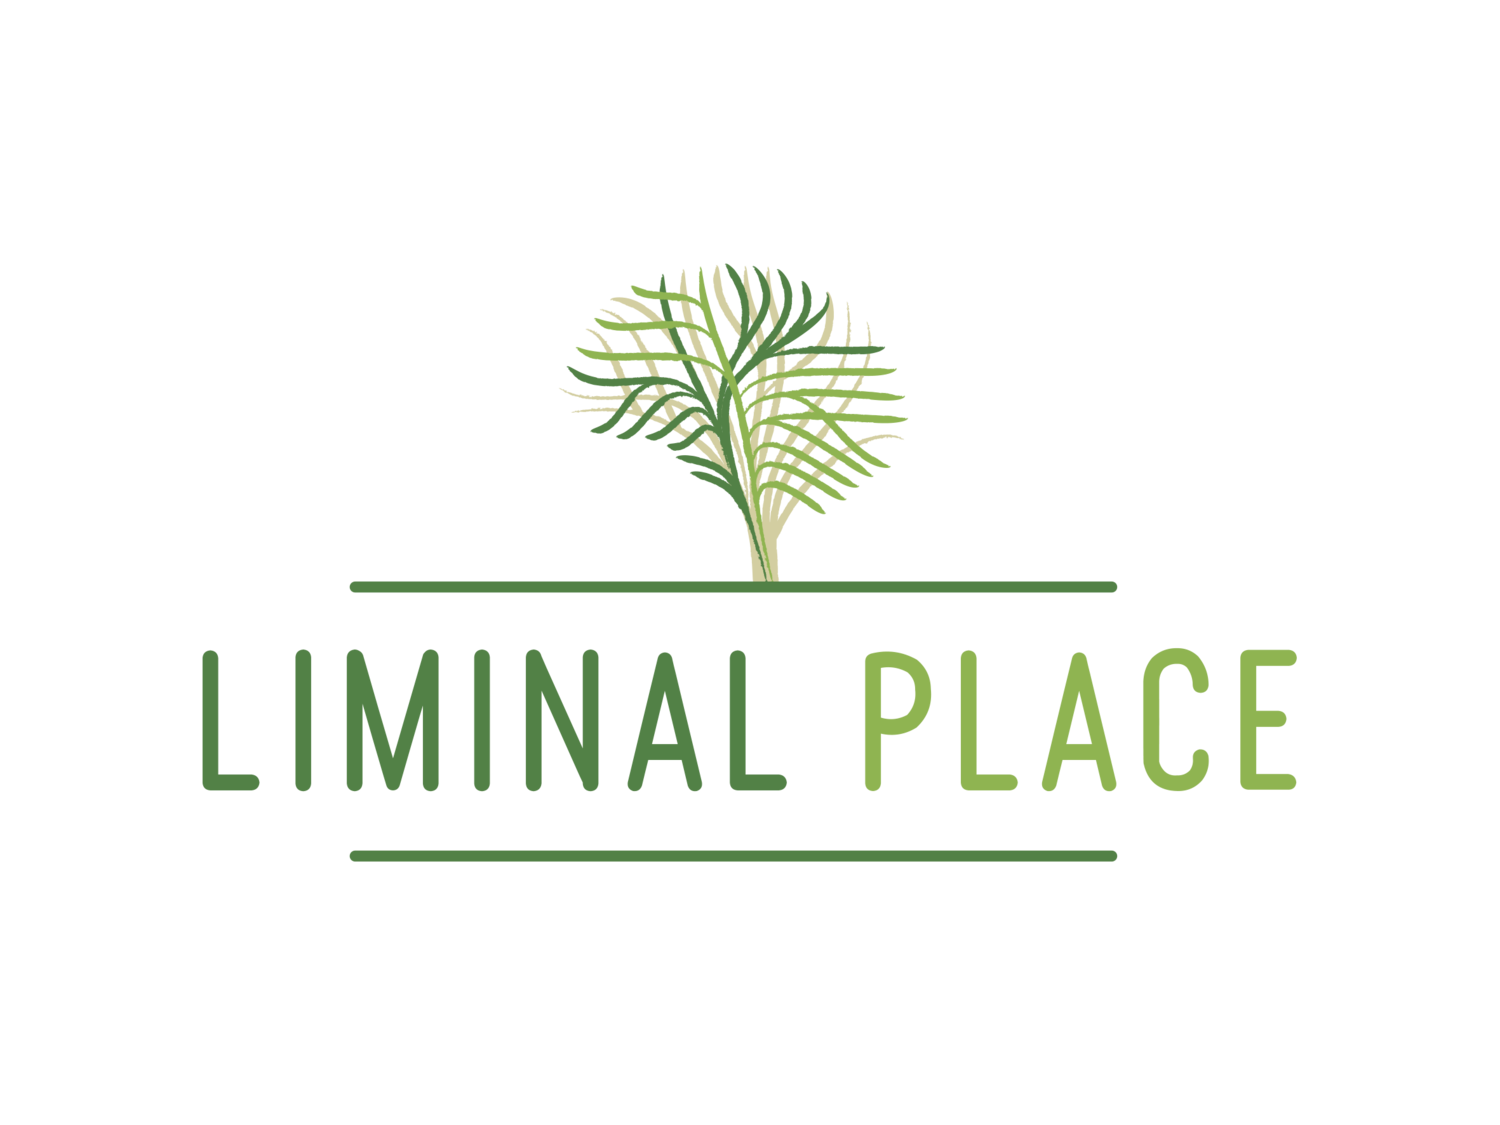 Liminal Place